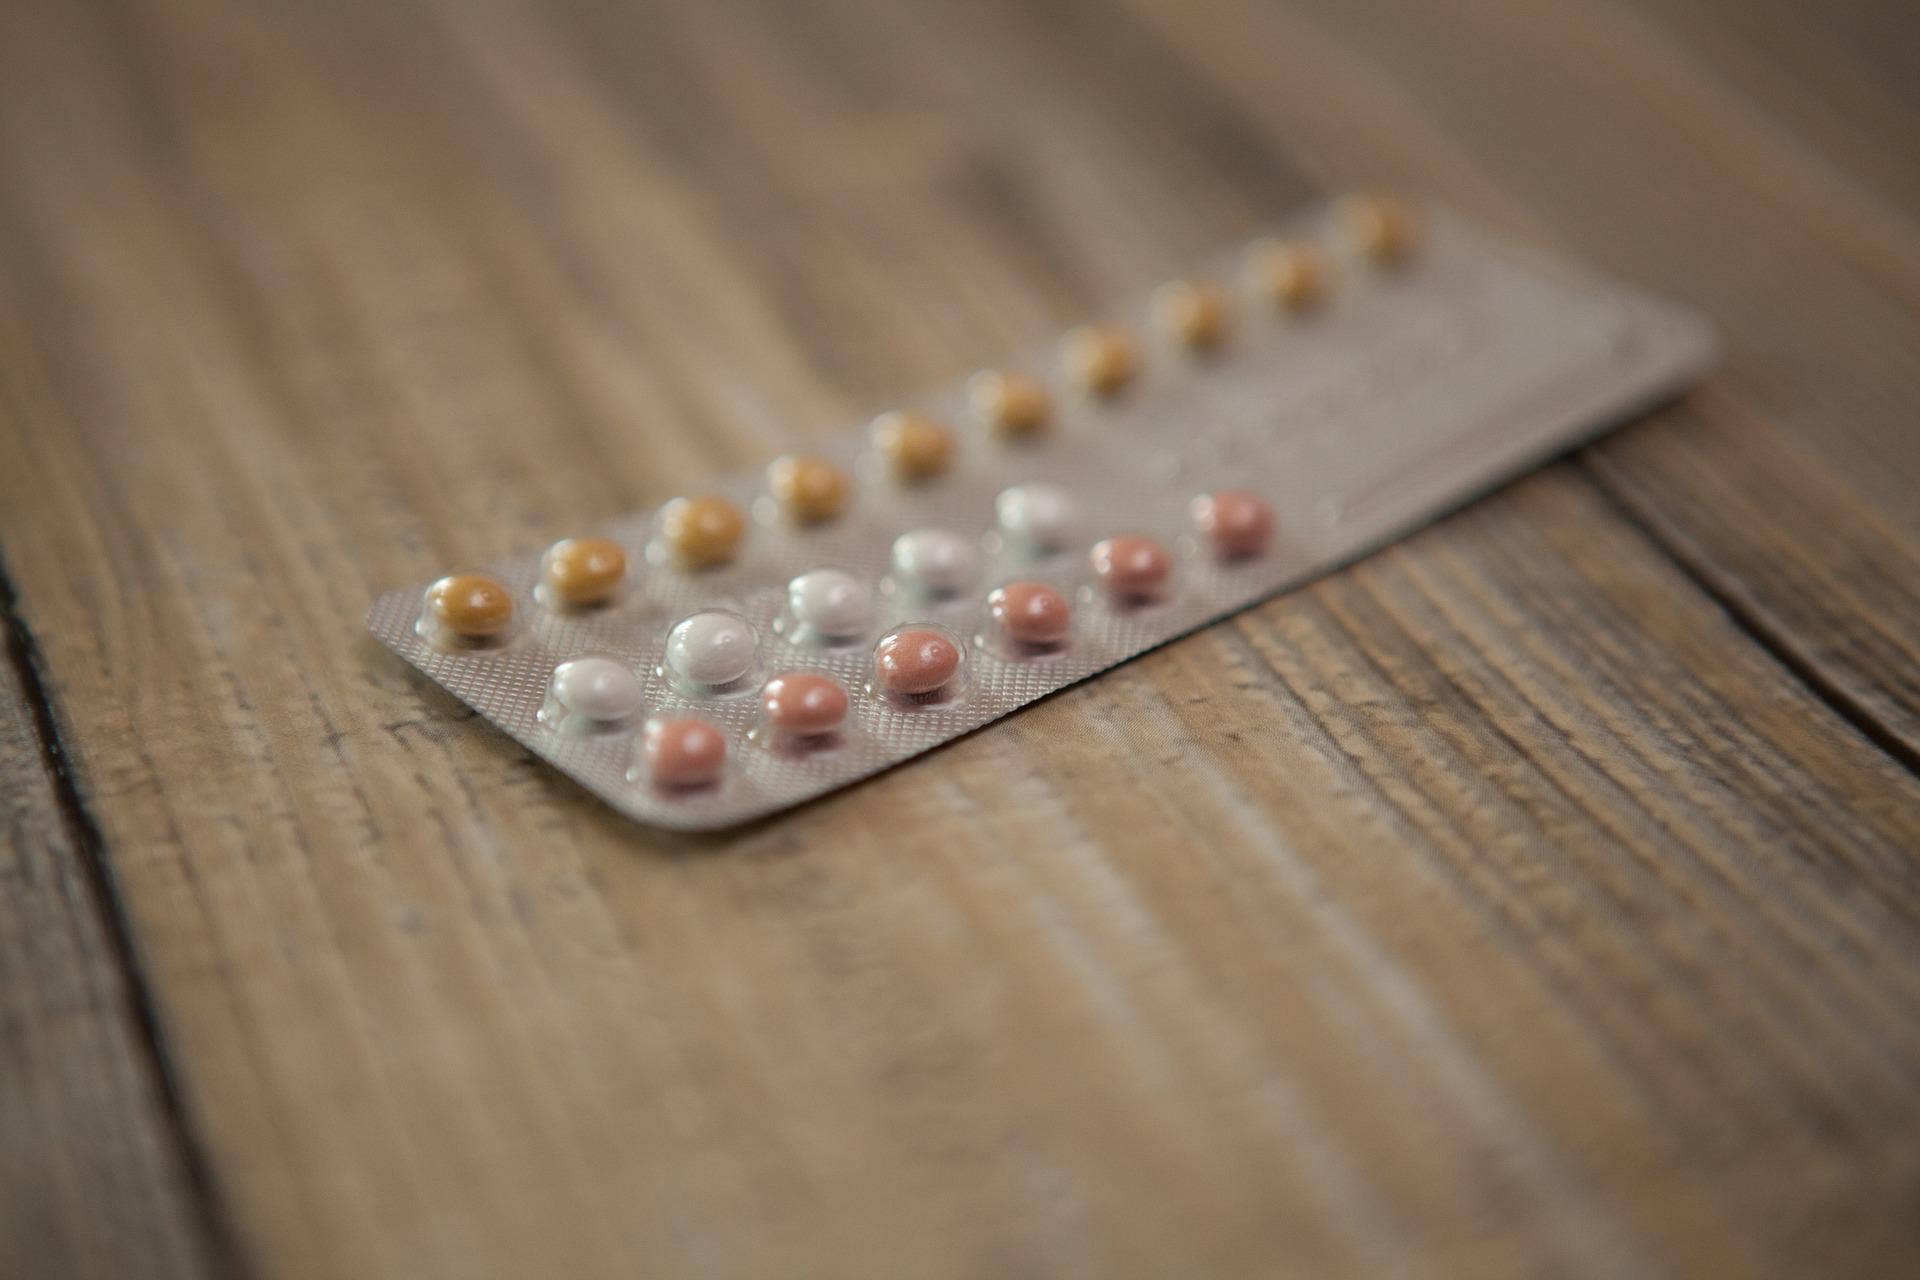 Perrigo Seeks FDA Approval For the First OTC Contraceptive Pill